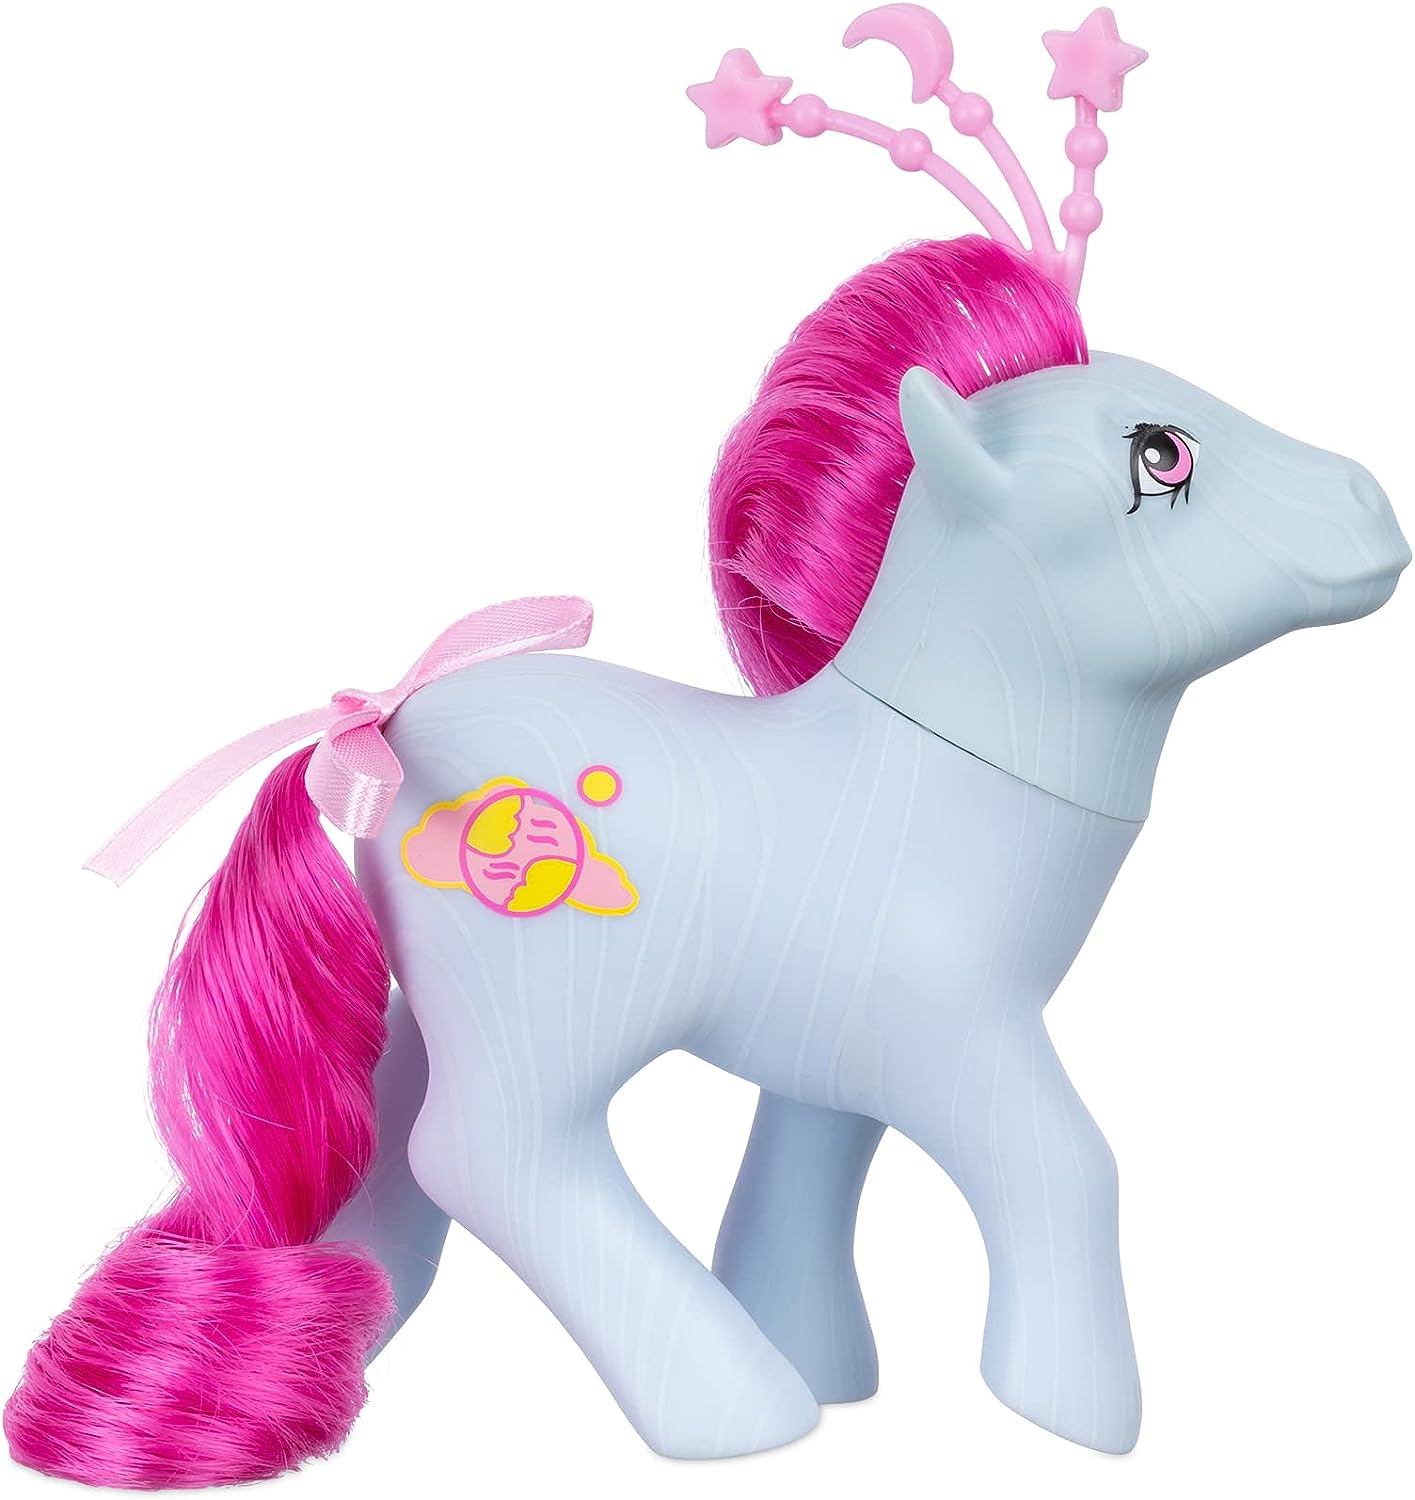 My Little Pony Celestial Ponies - Polaris